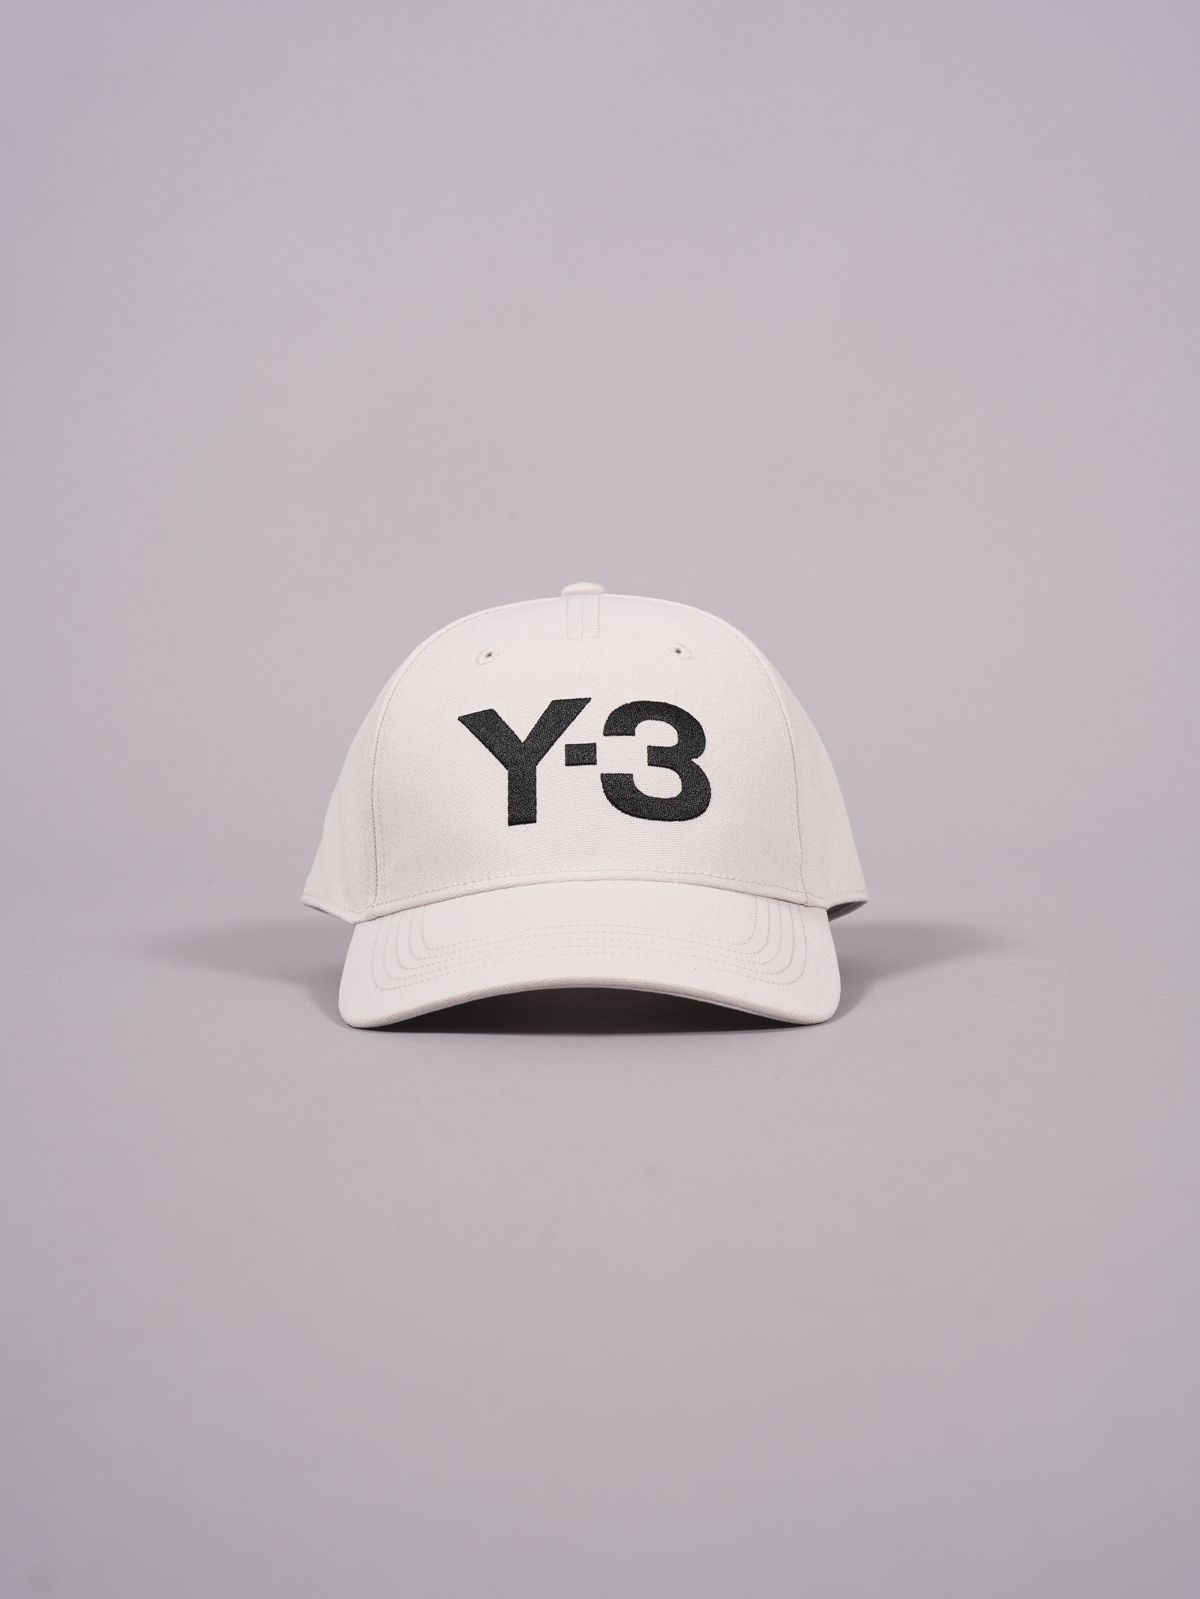 Y-3 - 【ラスト1点】 Y-3 LOGO CAP / ワイスリー ロゴキャップ (オフ 